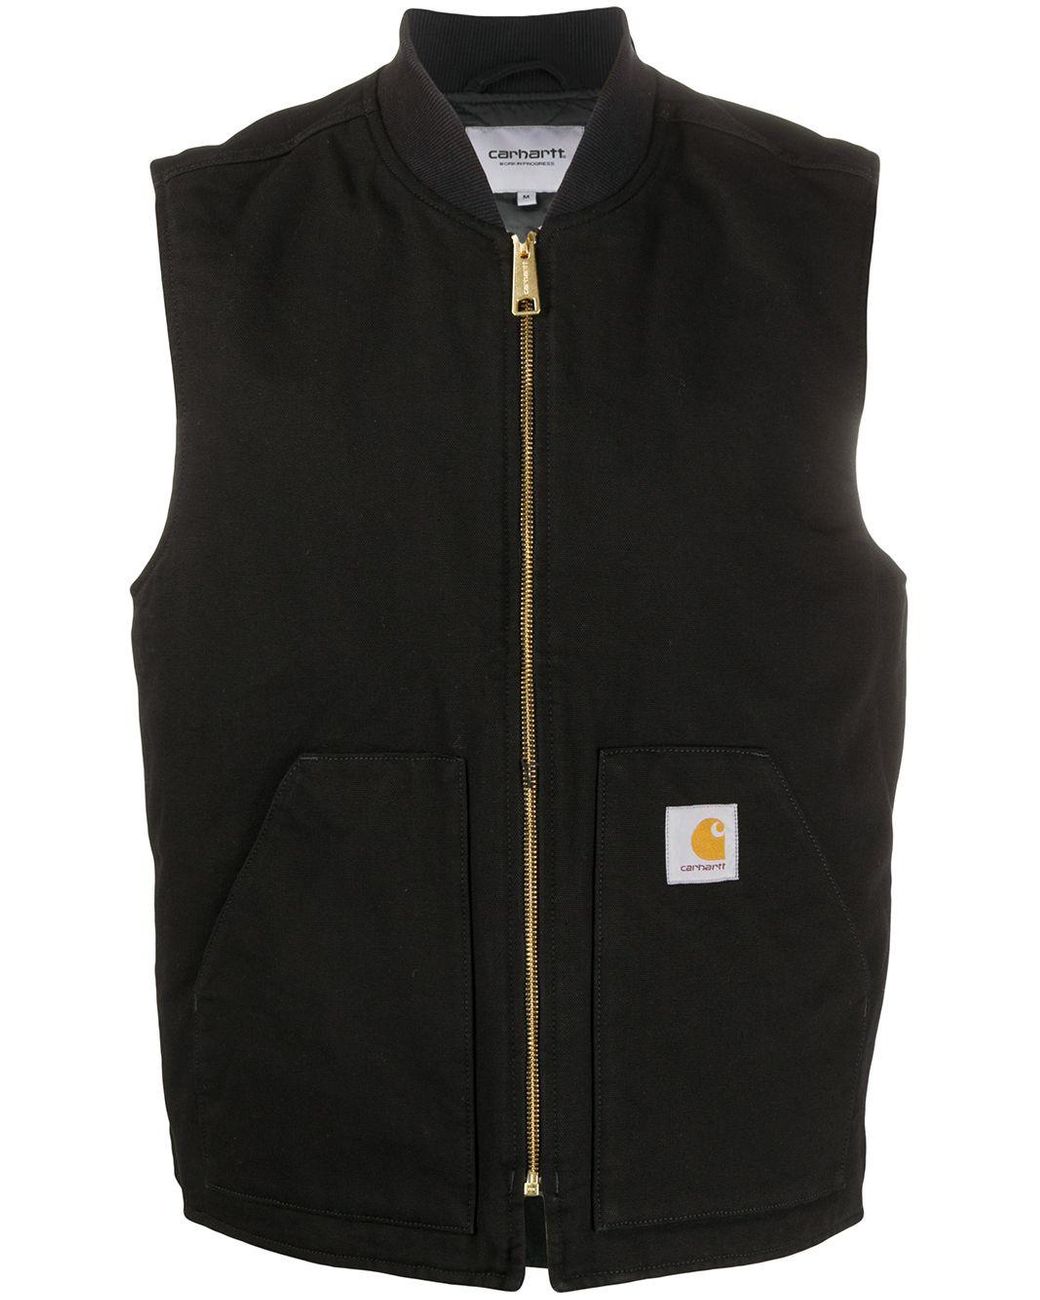 Carhartt WIP Cotton Logo Patch Zipped Vest in Black for Men - Lyst